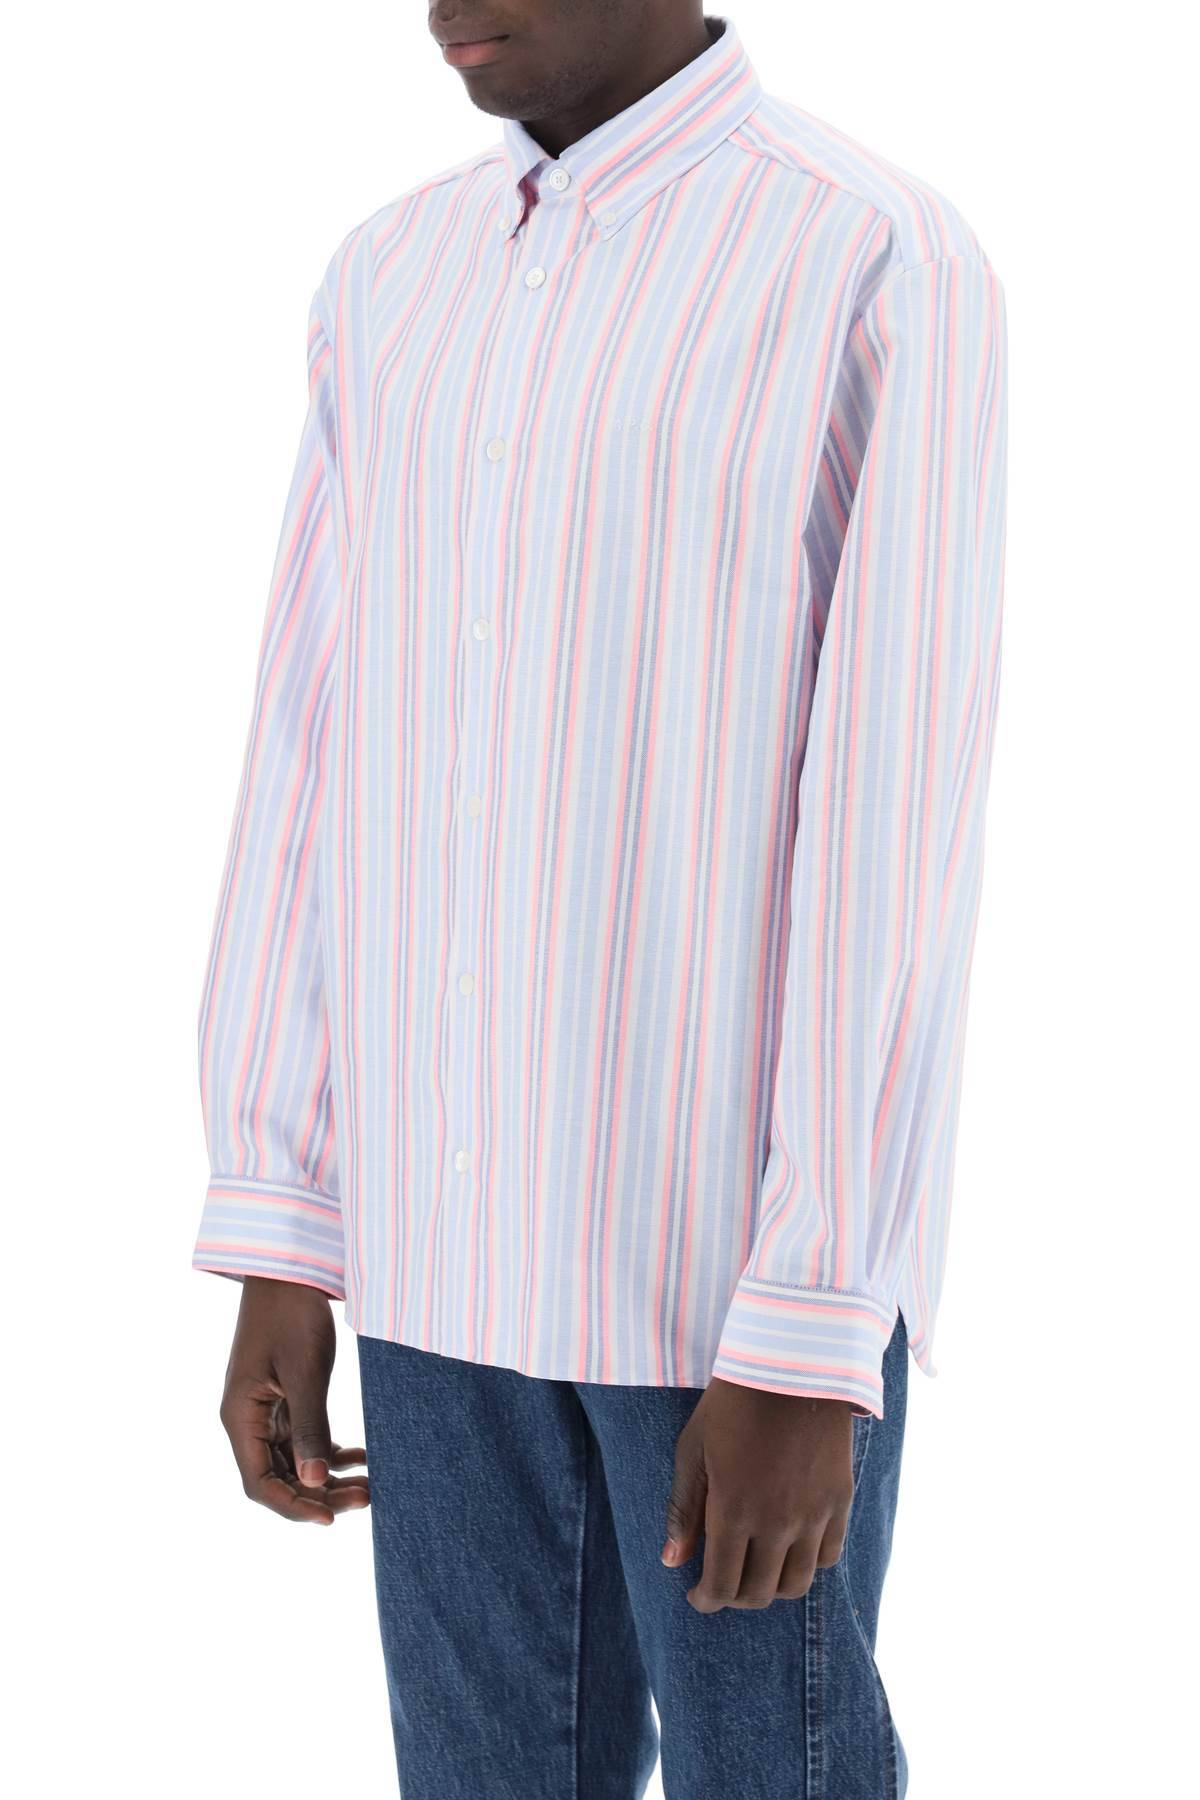 Shop Apc Mathias Striped Oxford Shirt In White,light Blue,pink,fluo